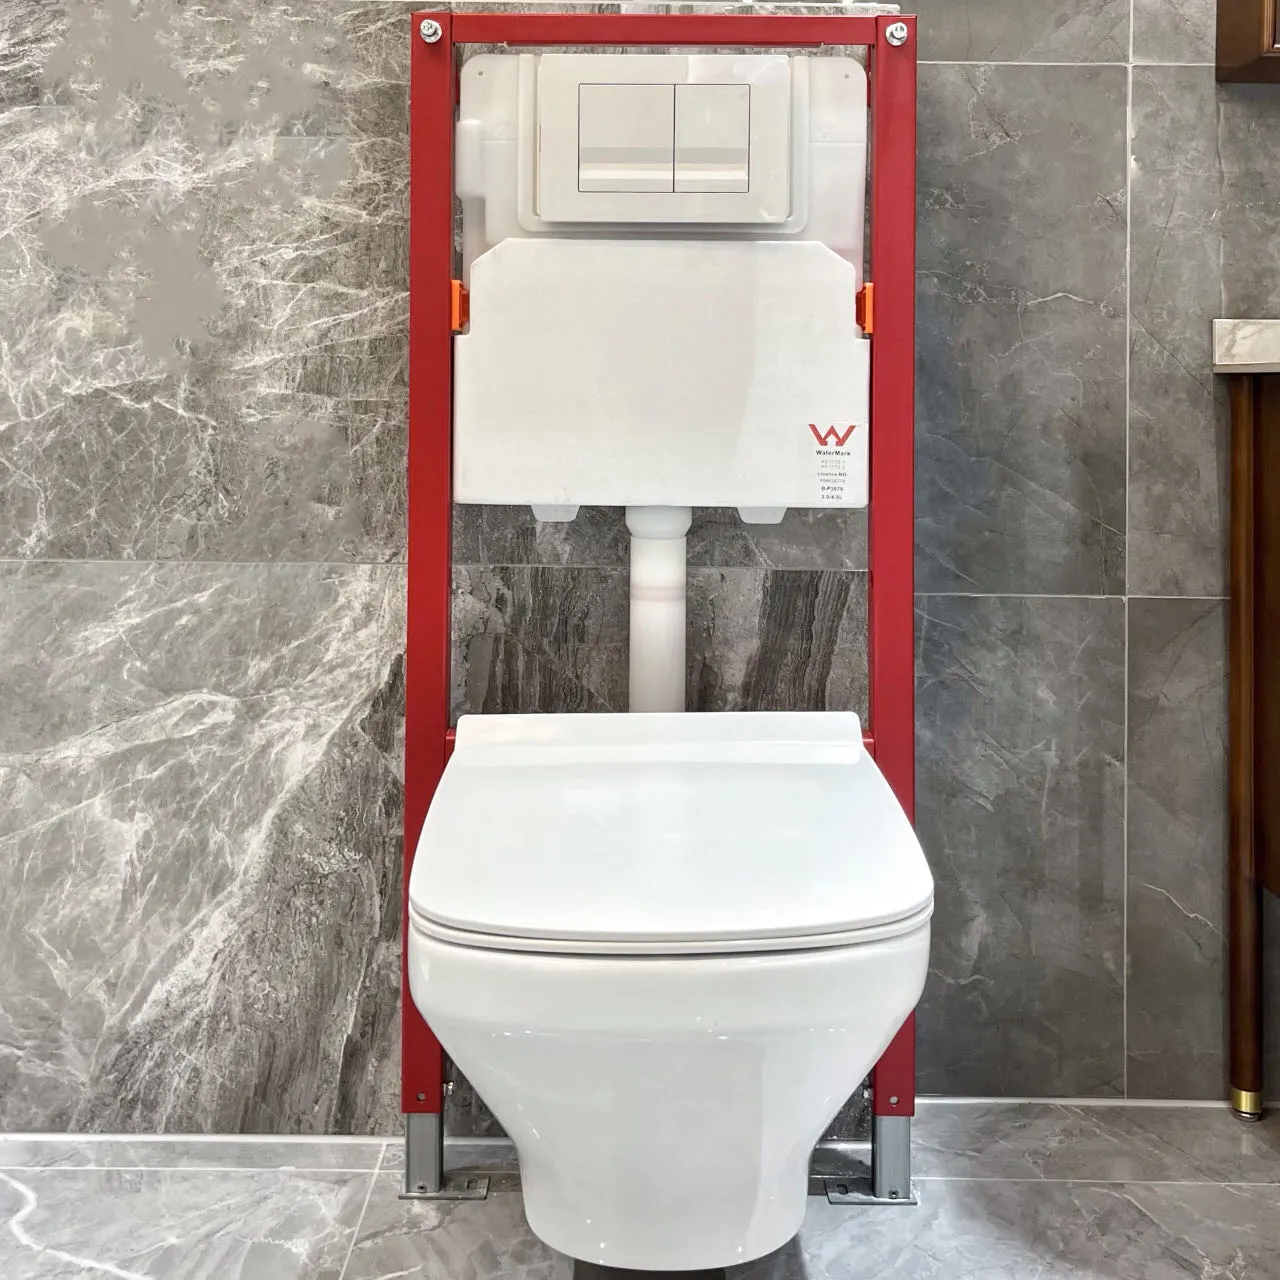 CE kare şekli duvara monte sıhhi tesisat su dolap banyo parlak beyaz renk seramik asılı Inodoro duvar asılı tuvalet